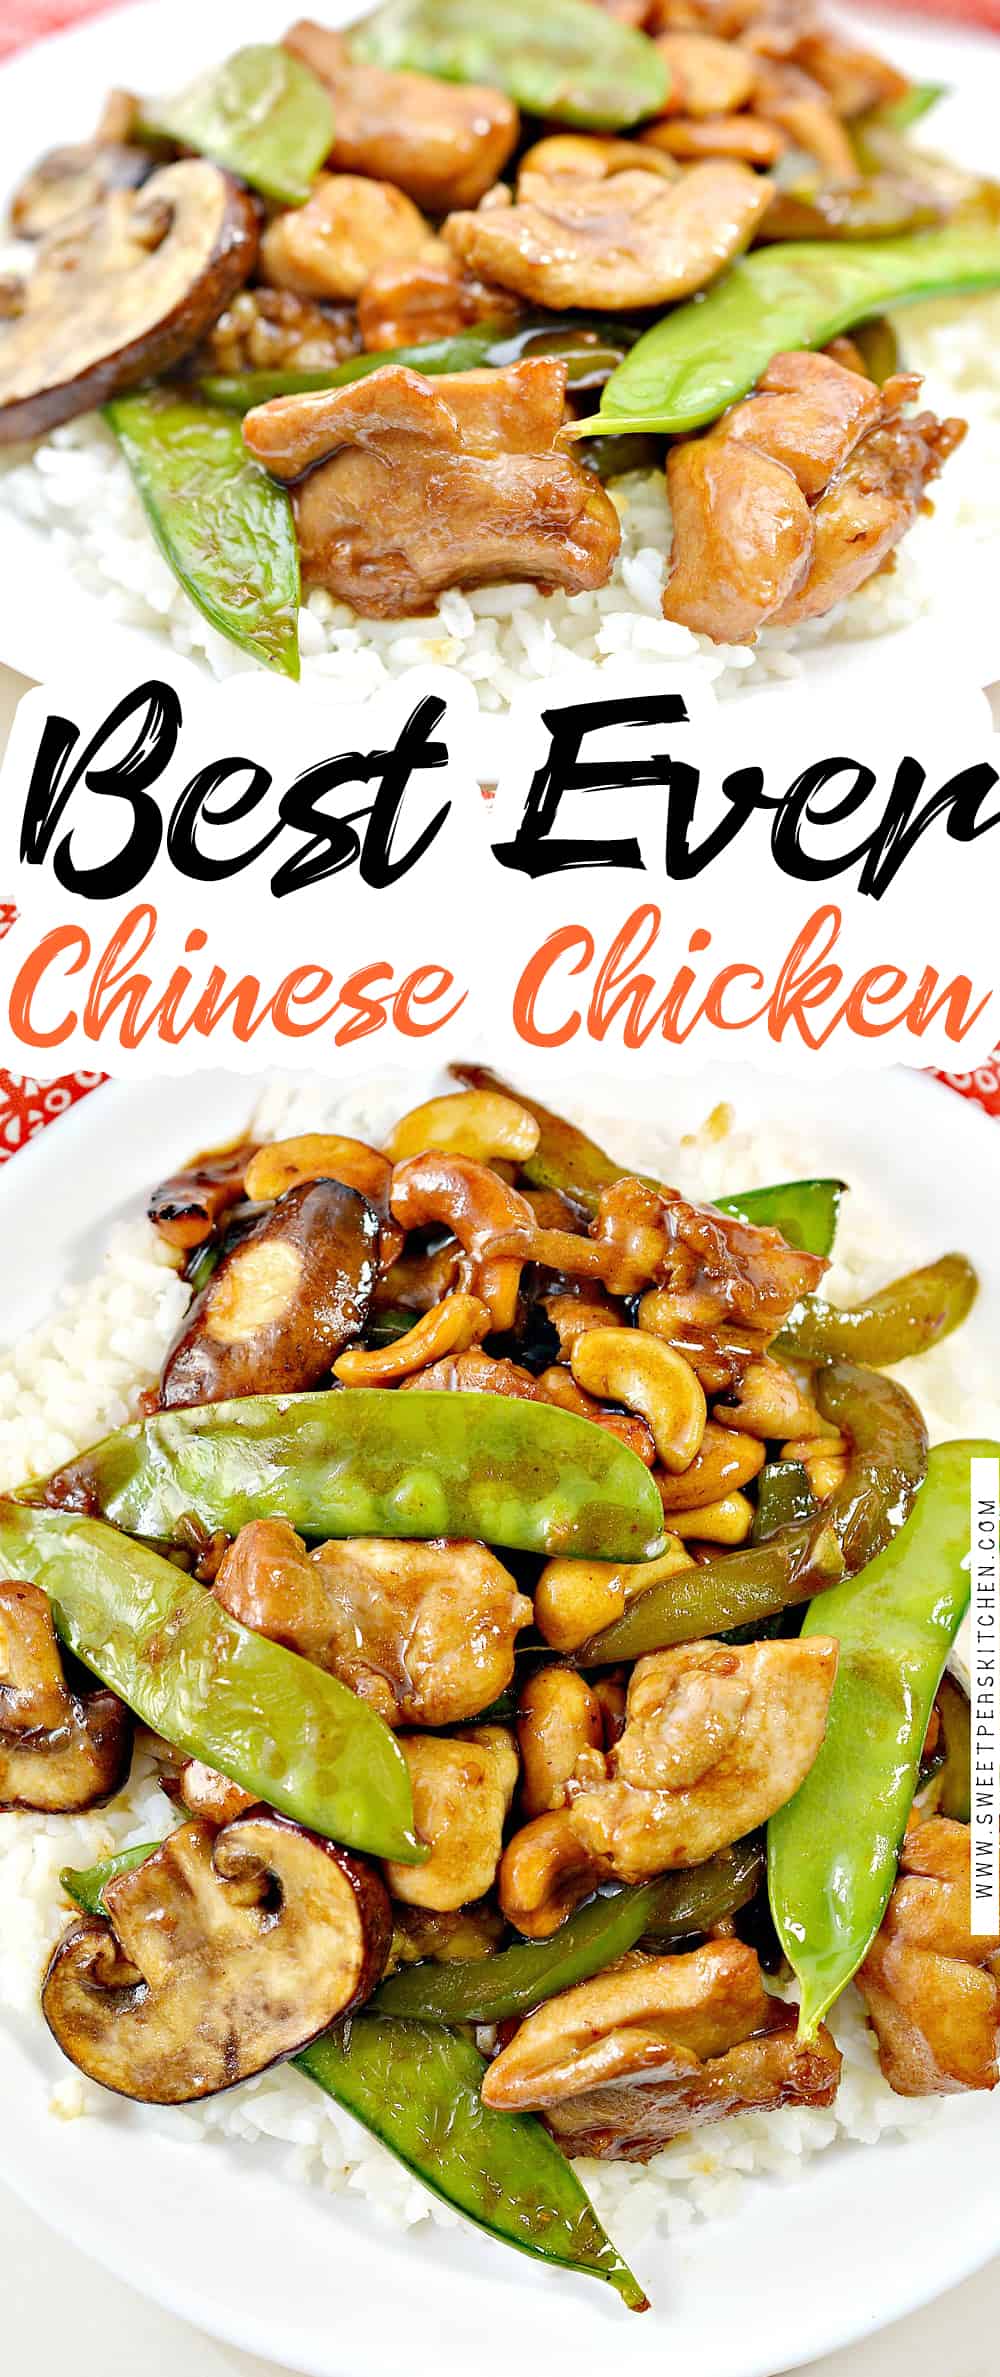 Best Ever Chinese Chicken on pinterest